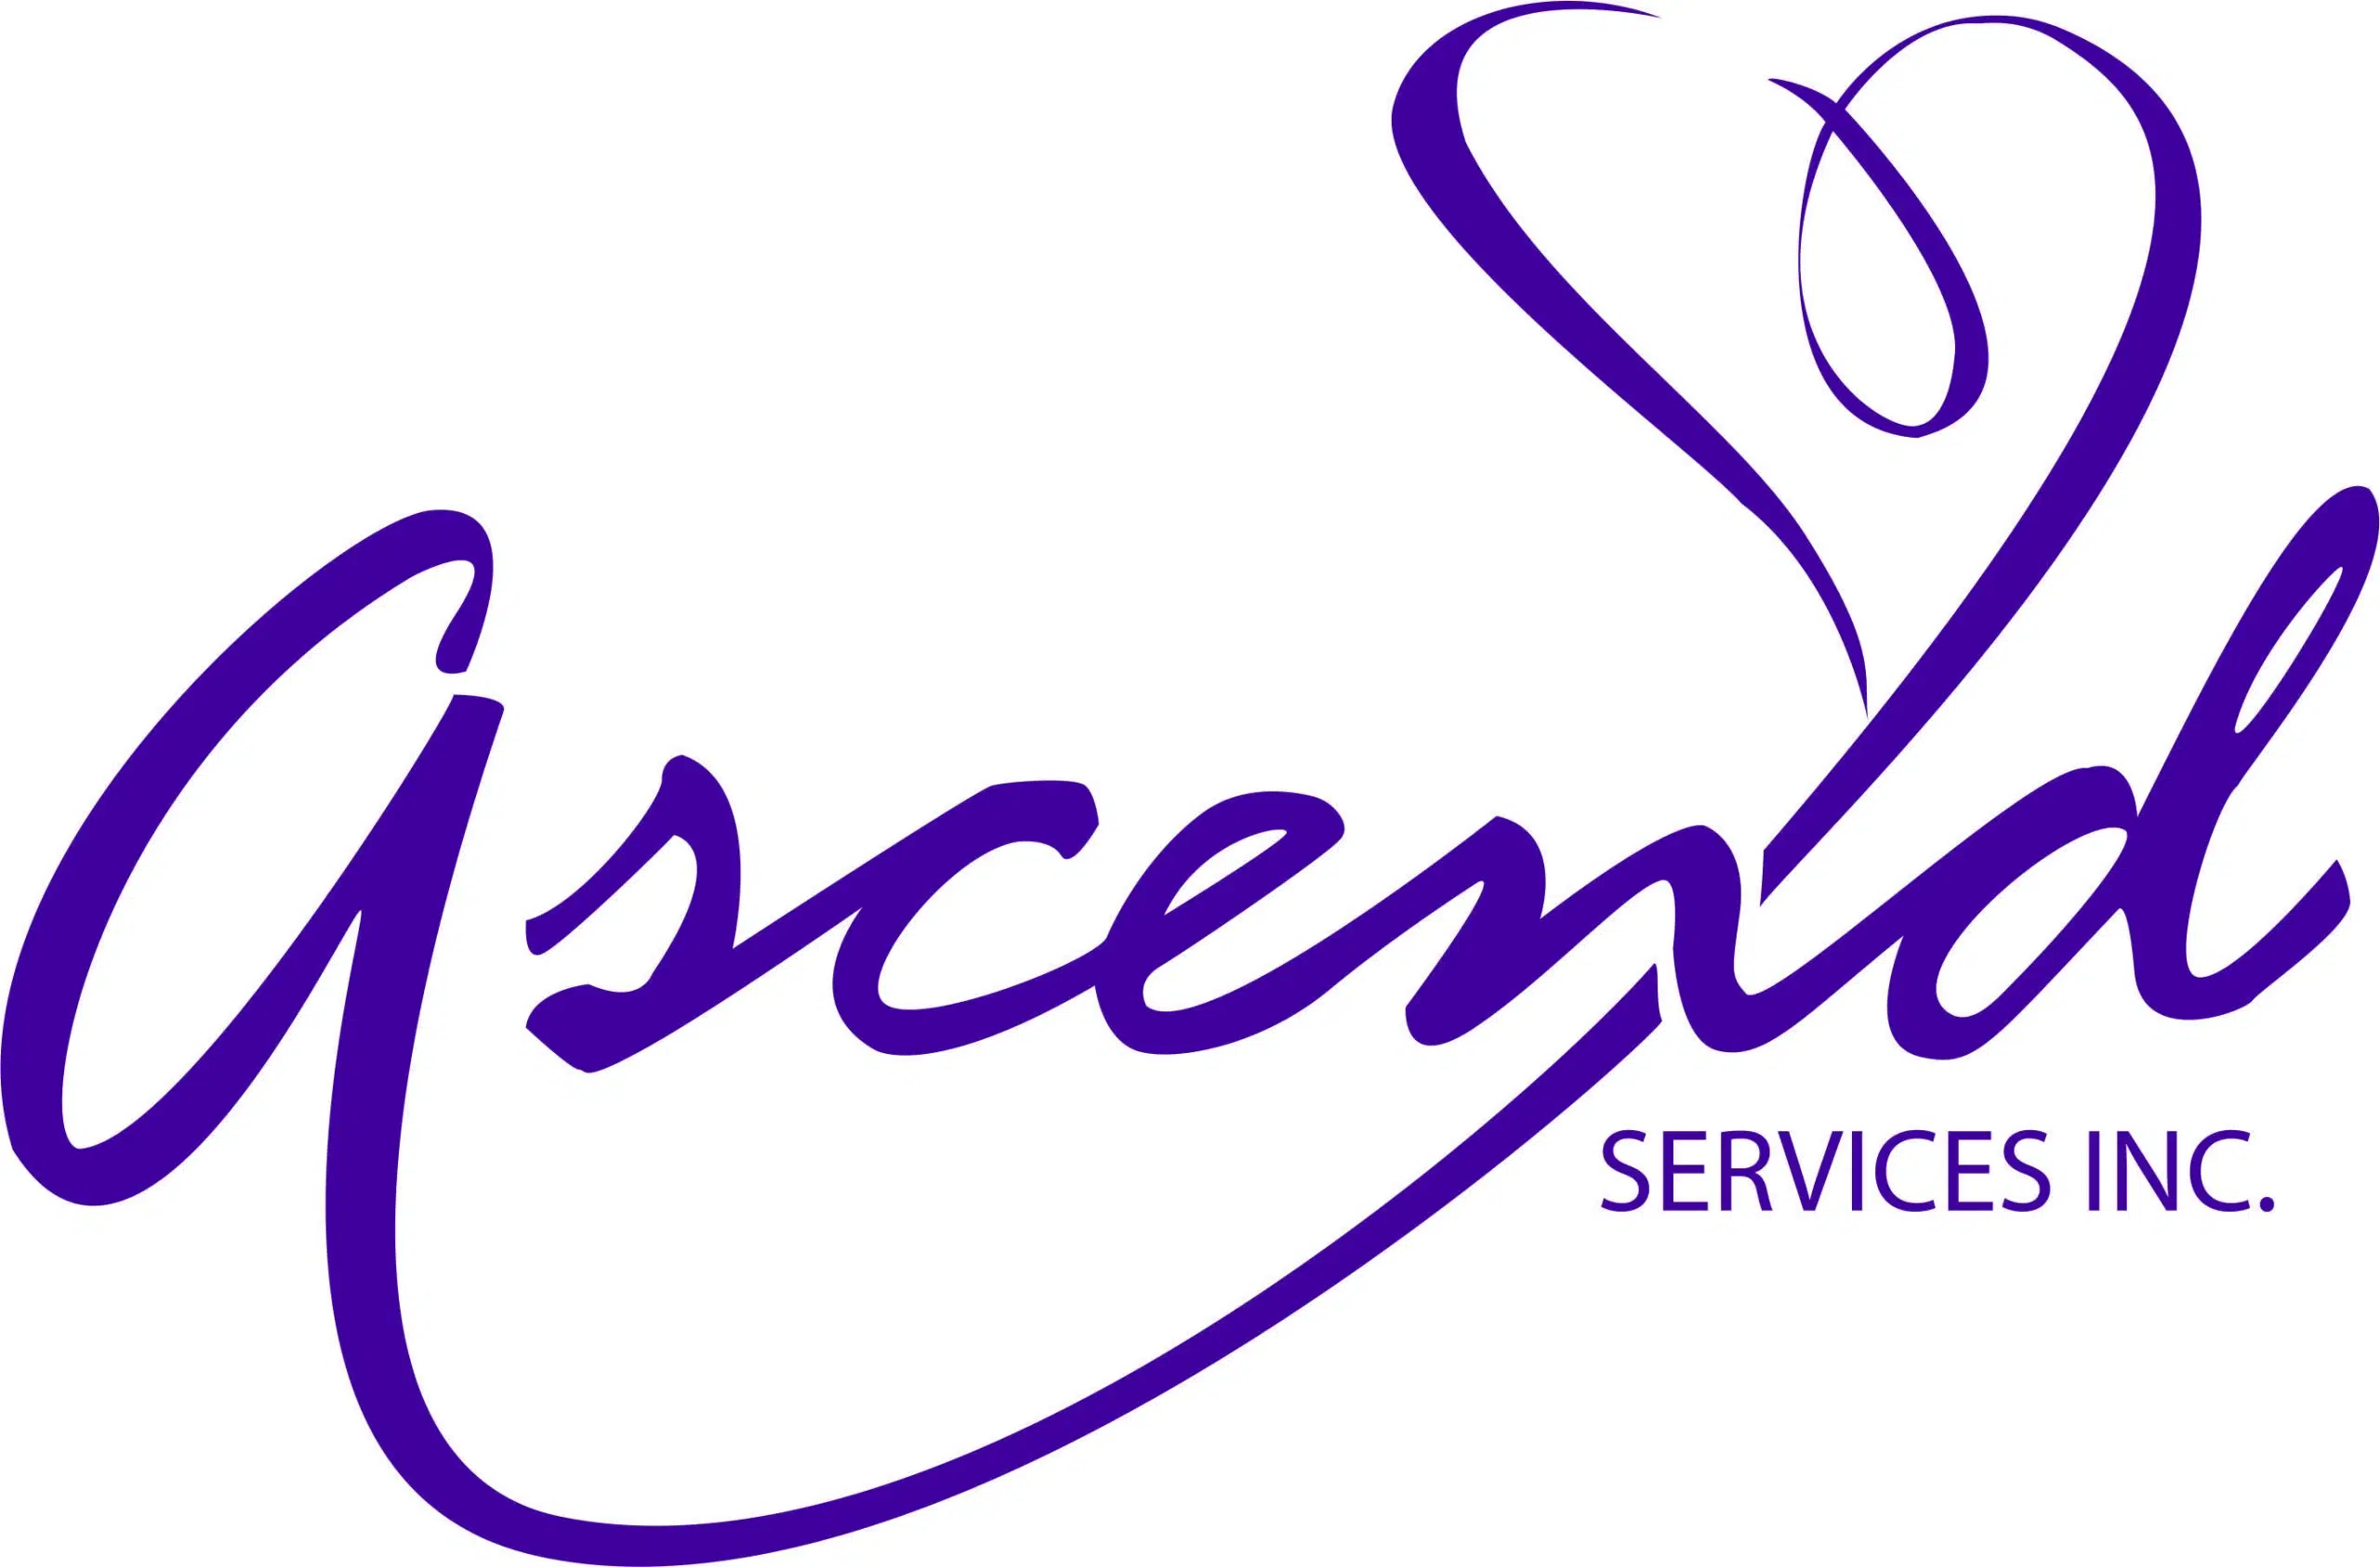 Ascend Services Hosting Community Job Fair This Week